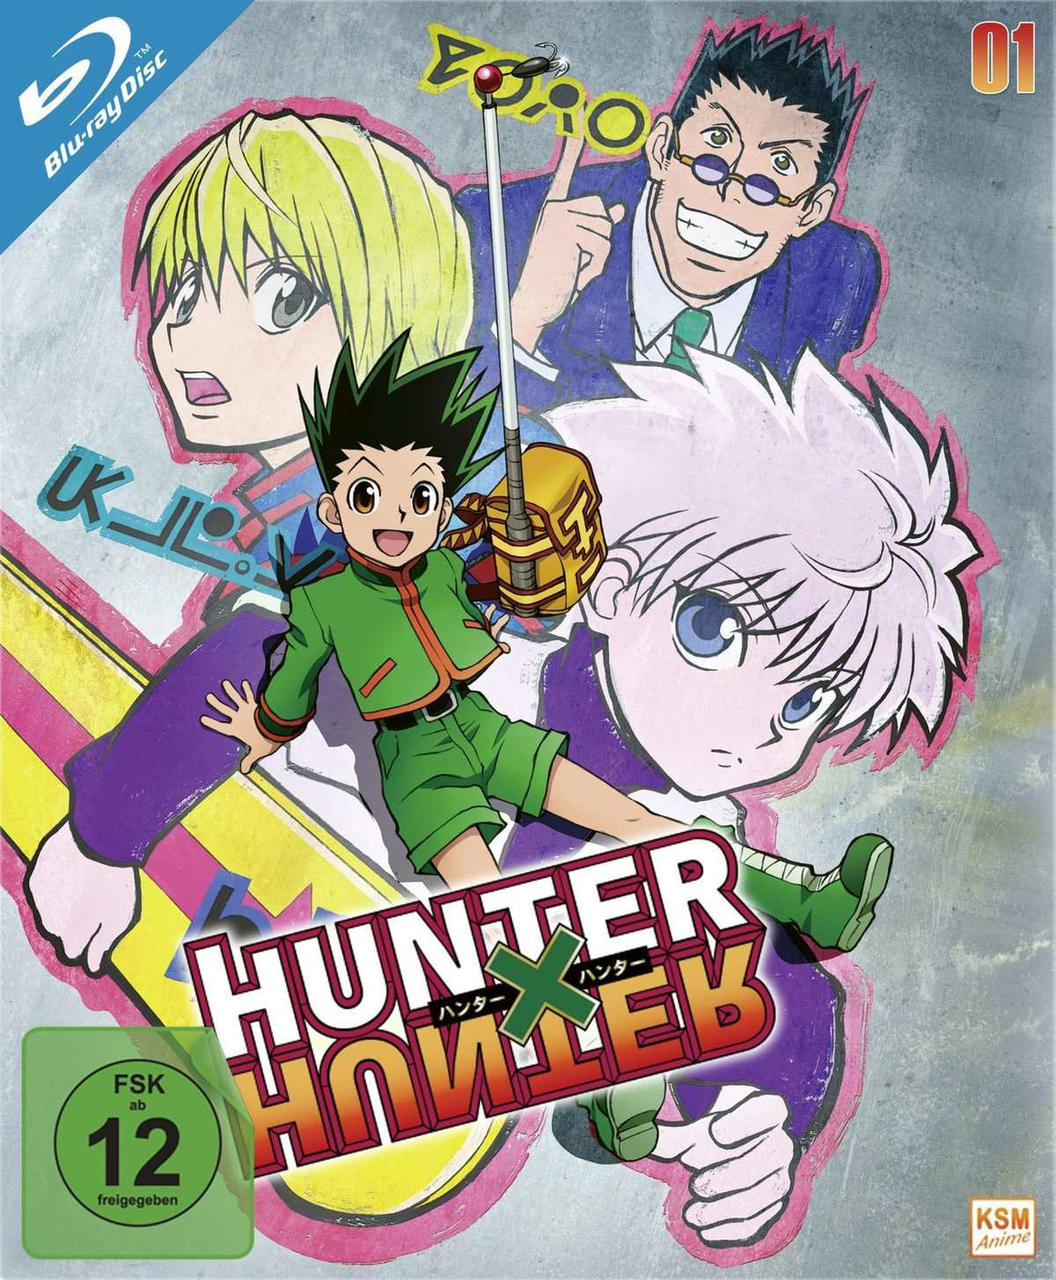 - 1 Edition: Volume New Blu-ray HunterxHunter